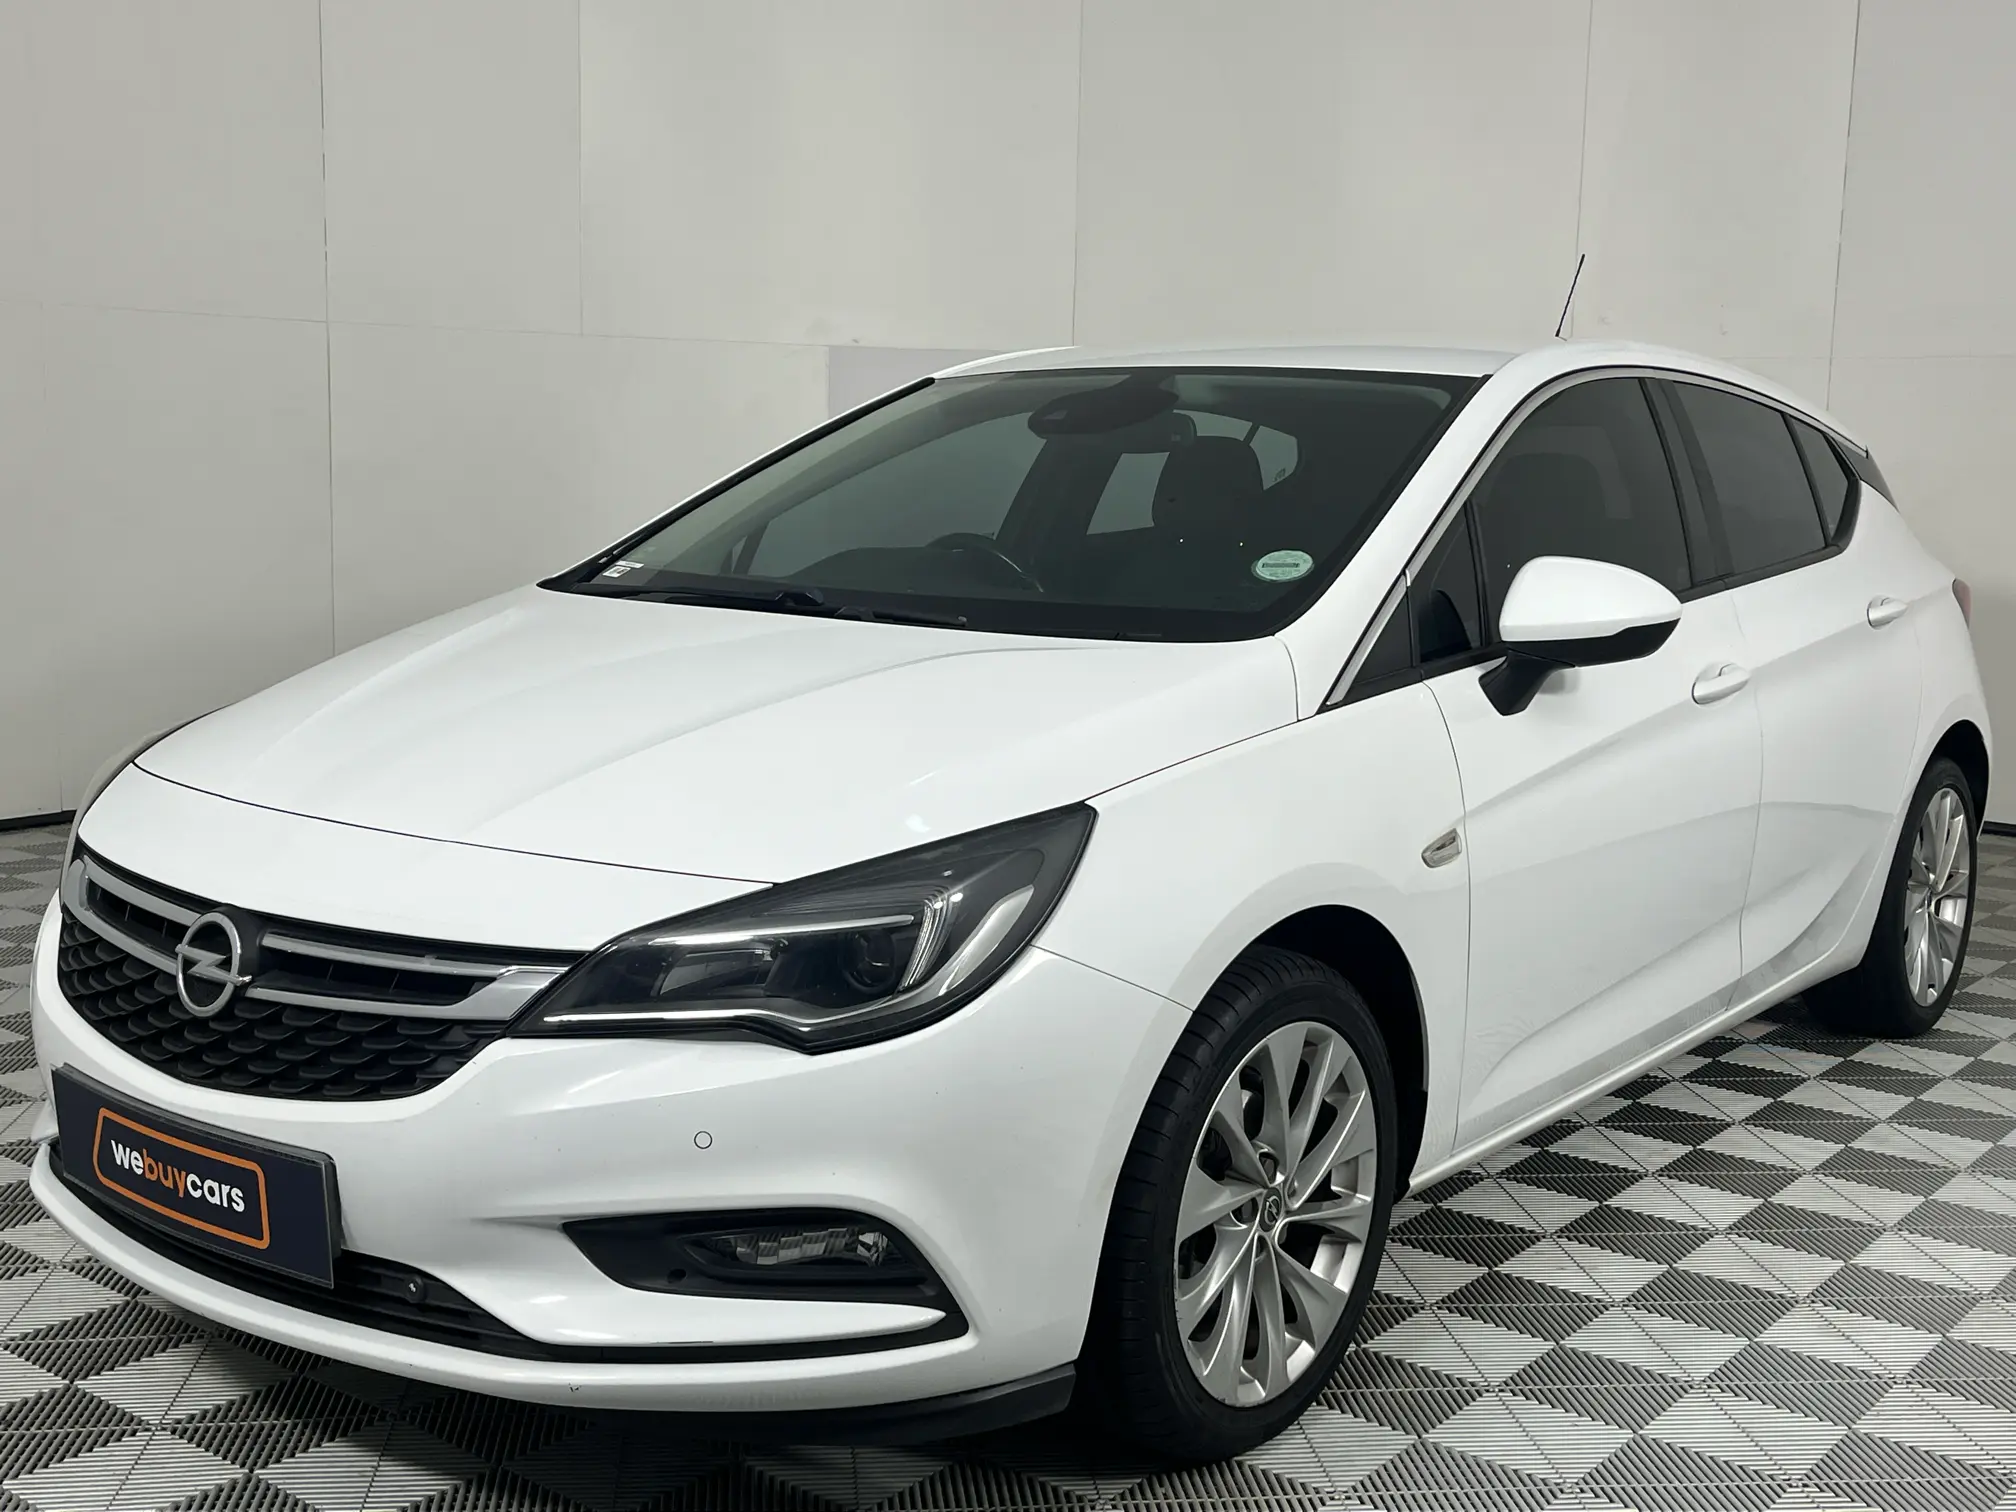 2017 Opel Astra 1.4T Enjoy Auto (5dr)